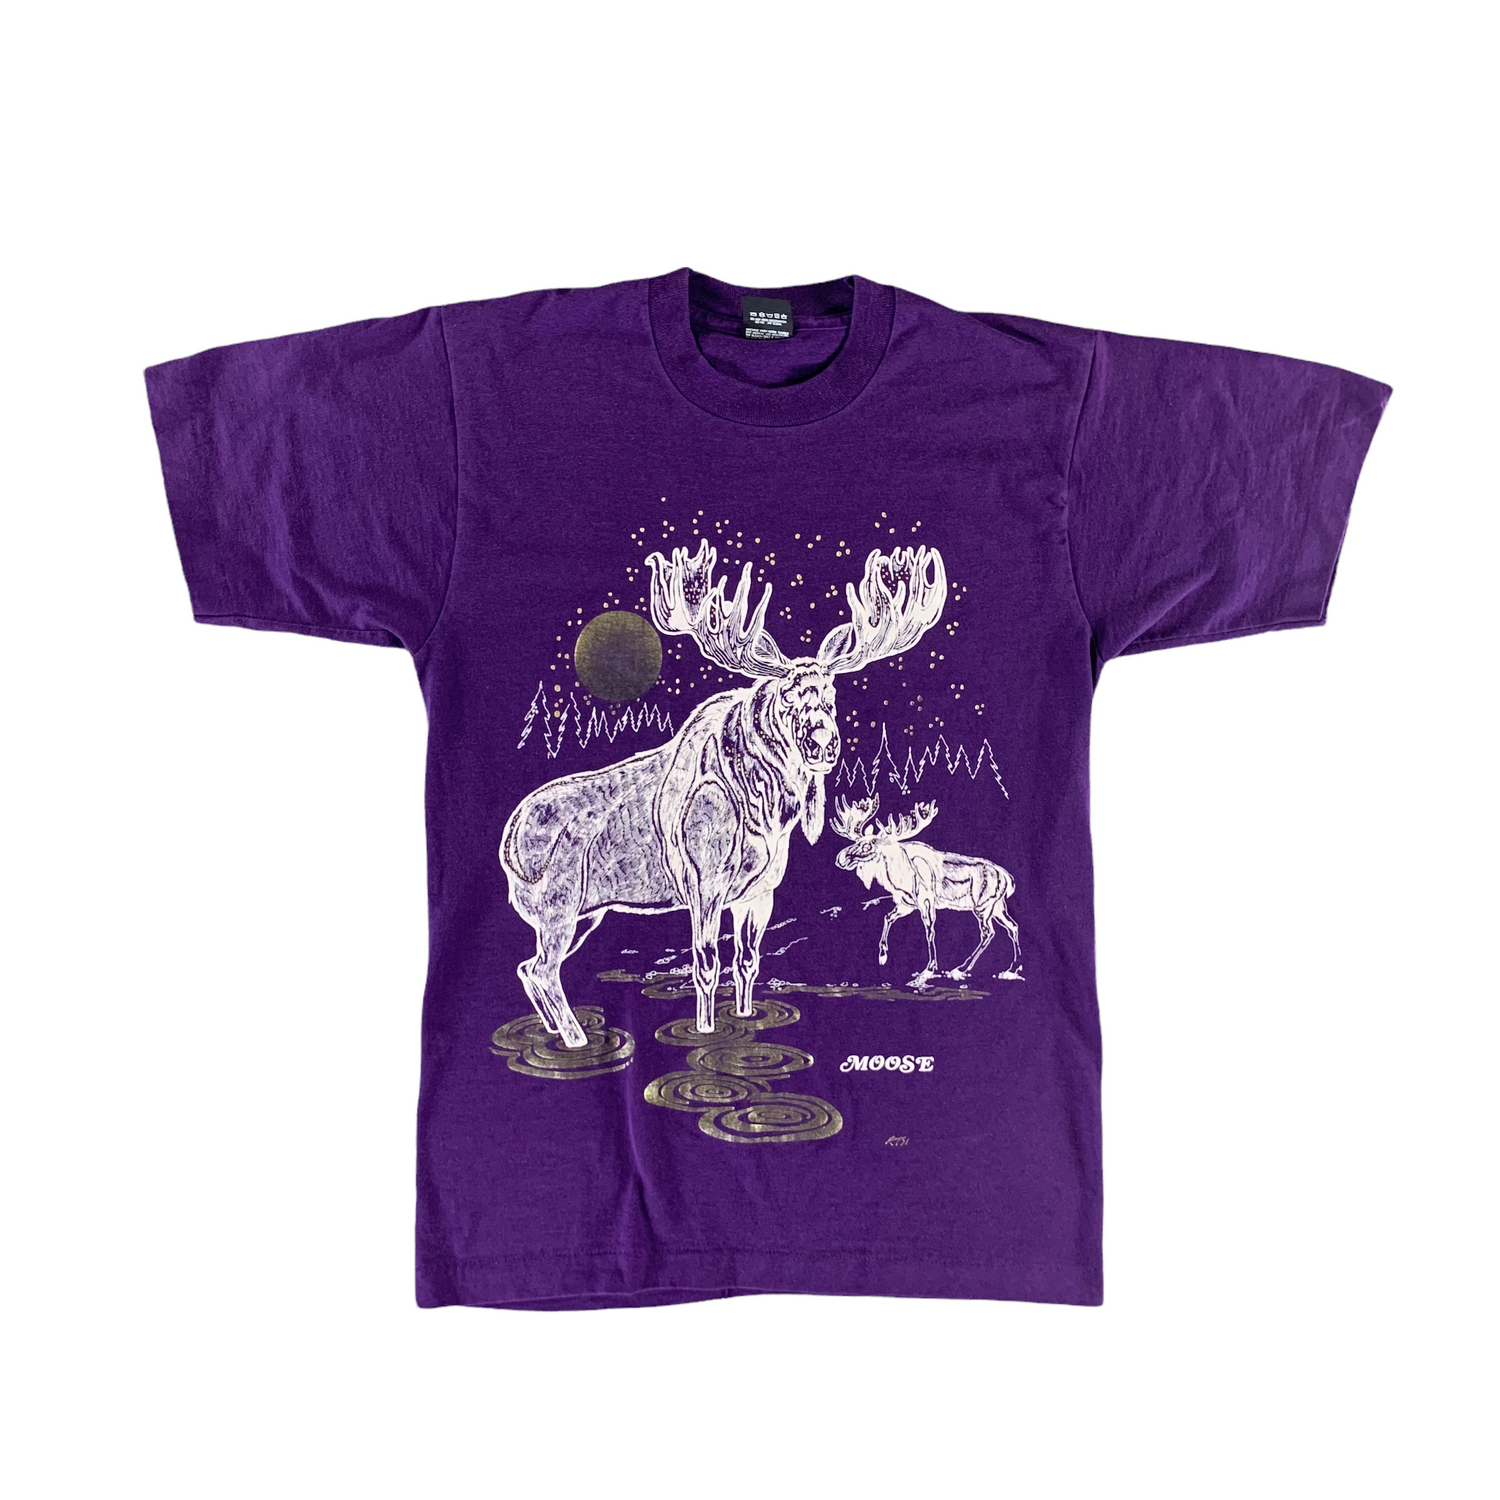 Vintage 1990s Moose T-shirt size Medium